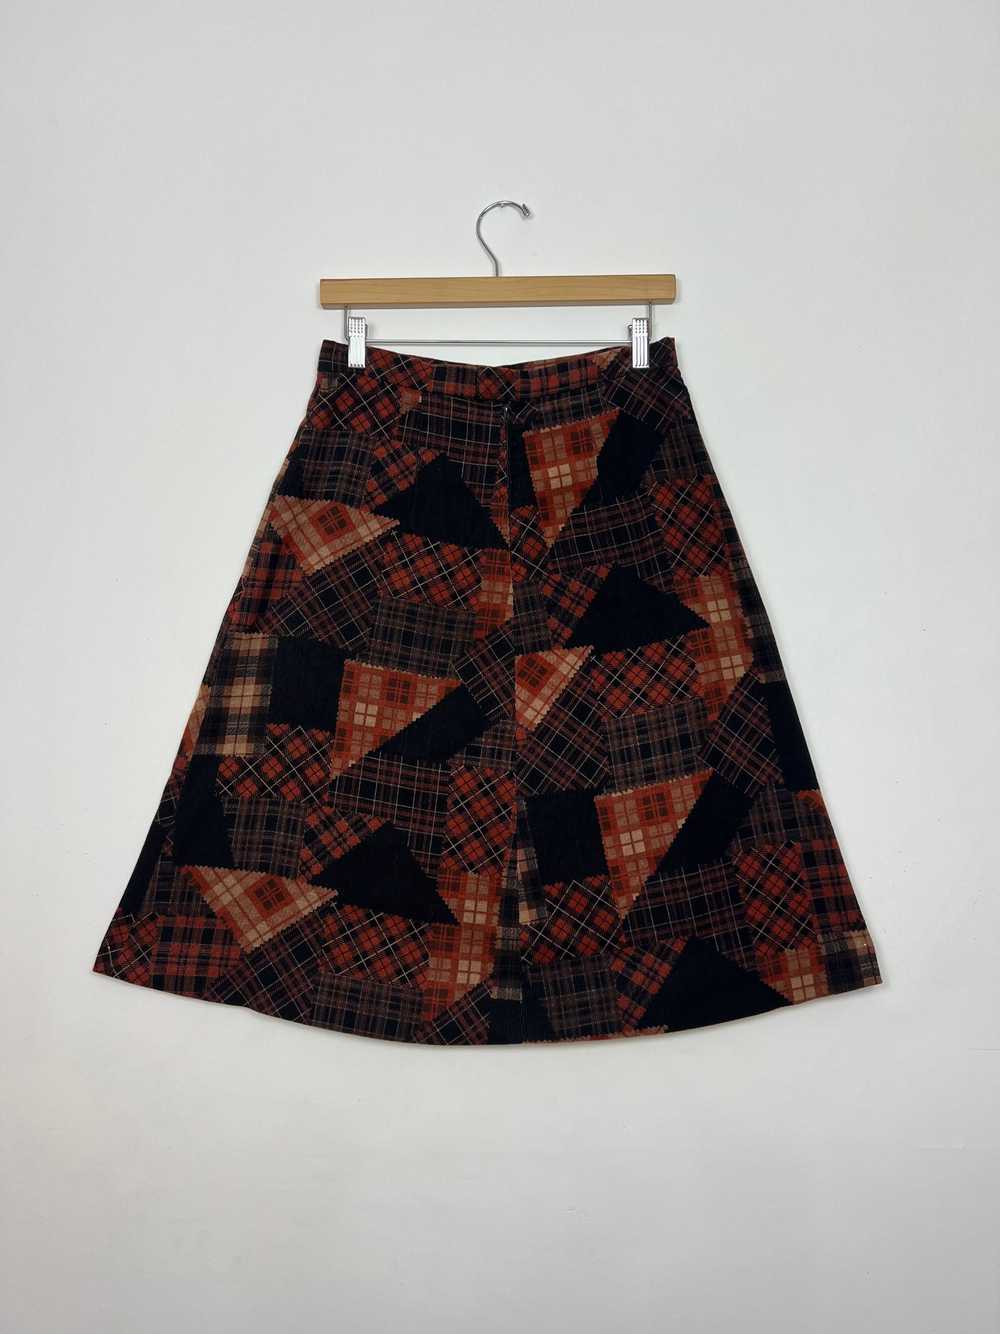 1970's Handmade Plaid Patchwork Printed Skirt - image 3